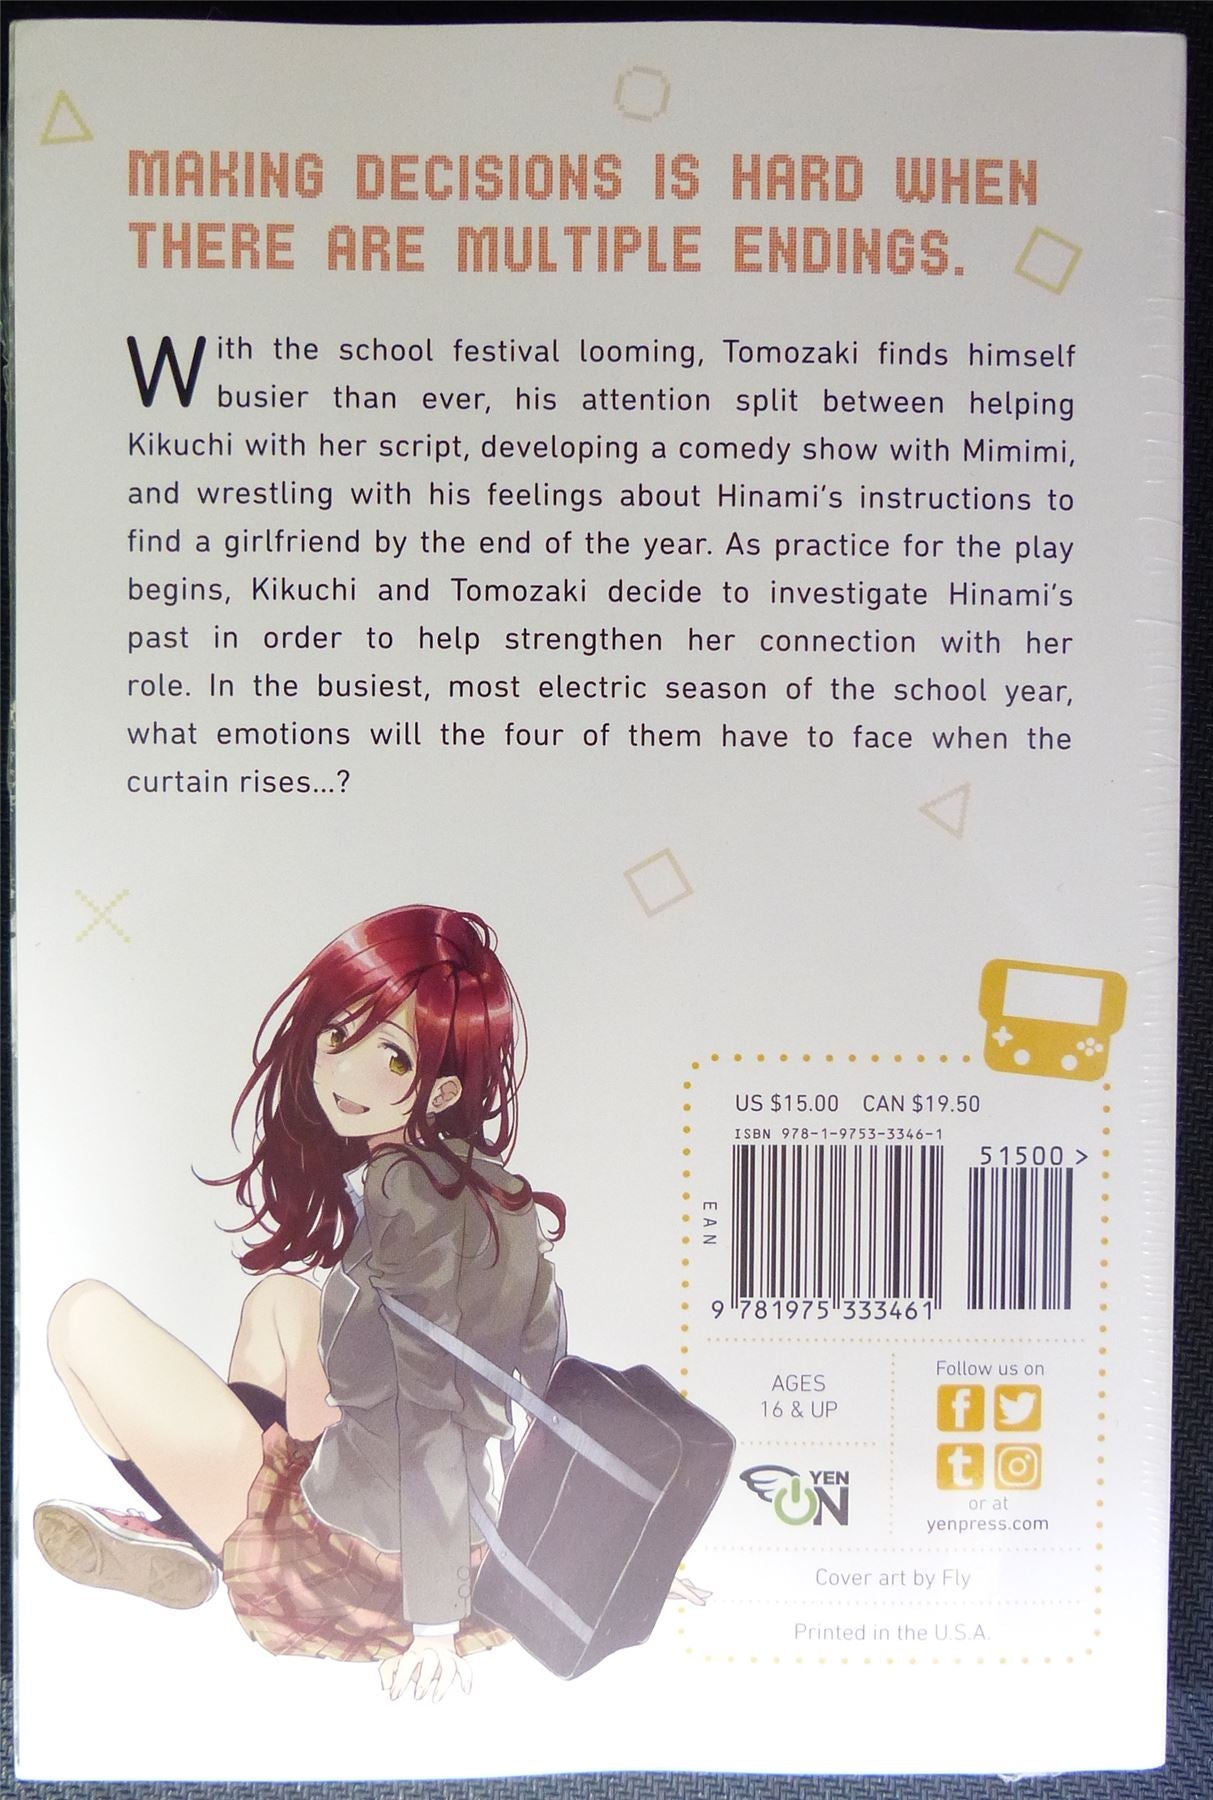 BOTTOM-Tier Character Tomozaki - Yen Press Novel Book Softback #5V1